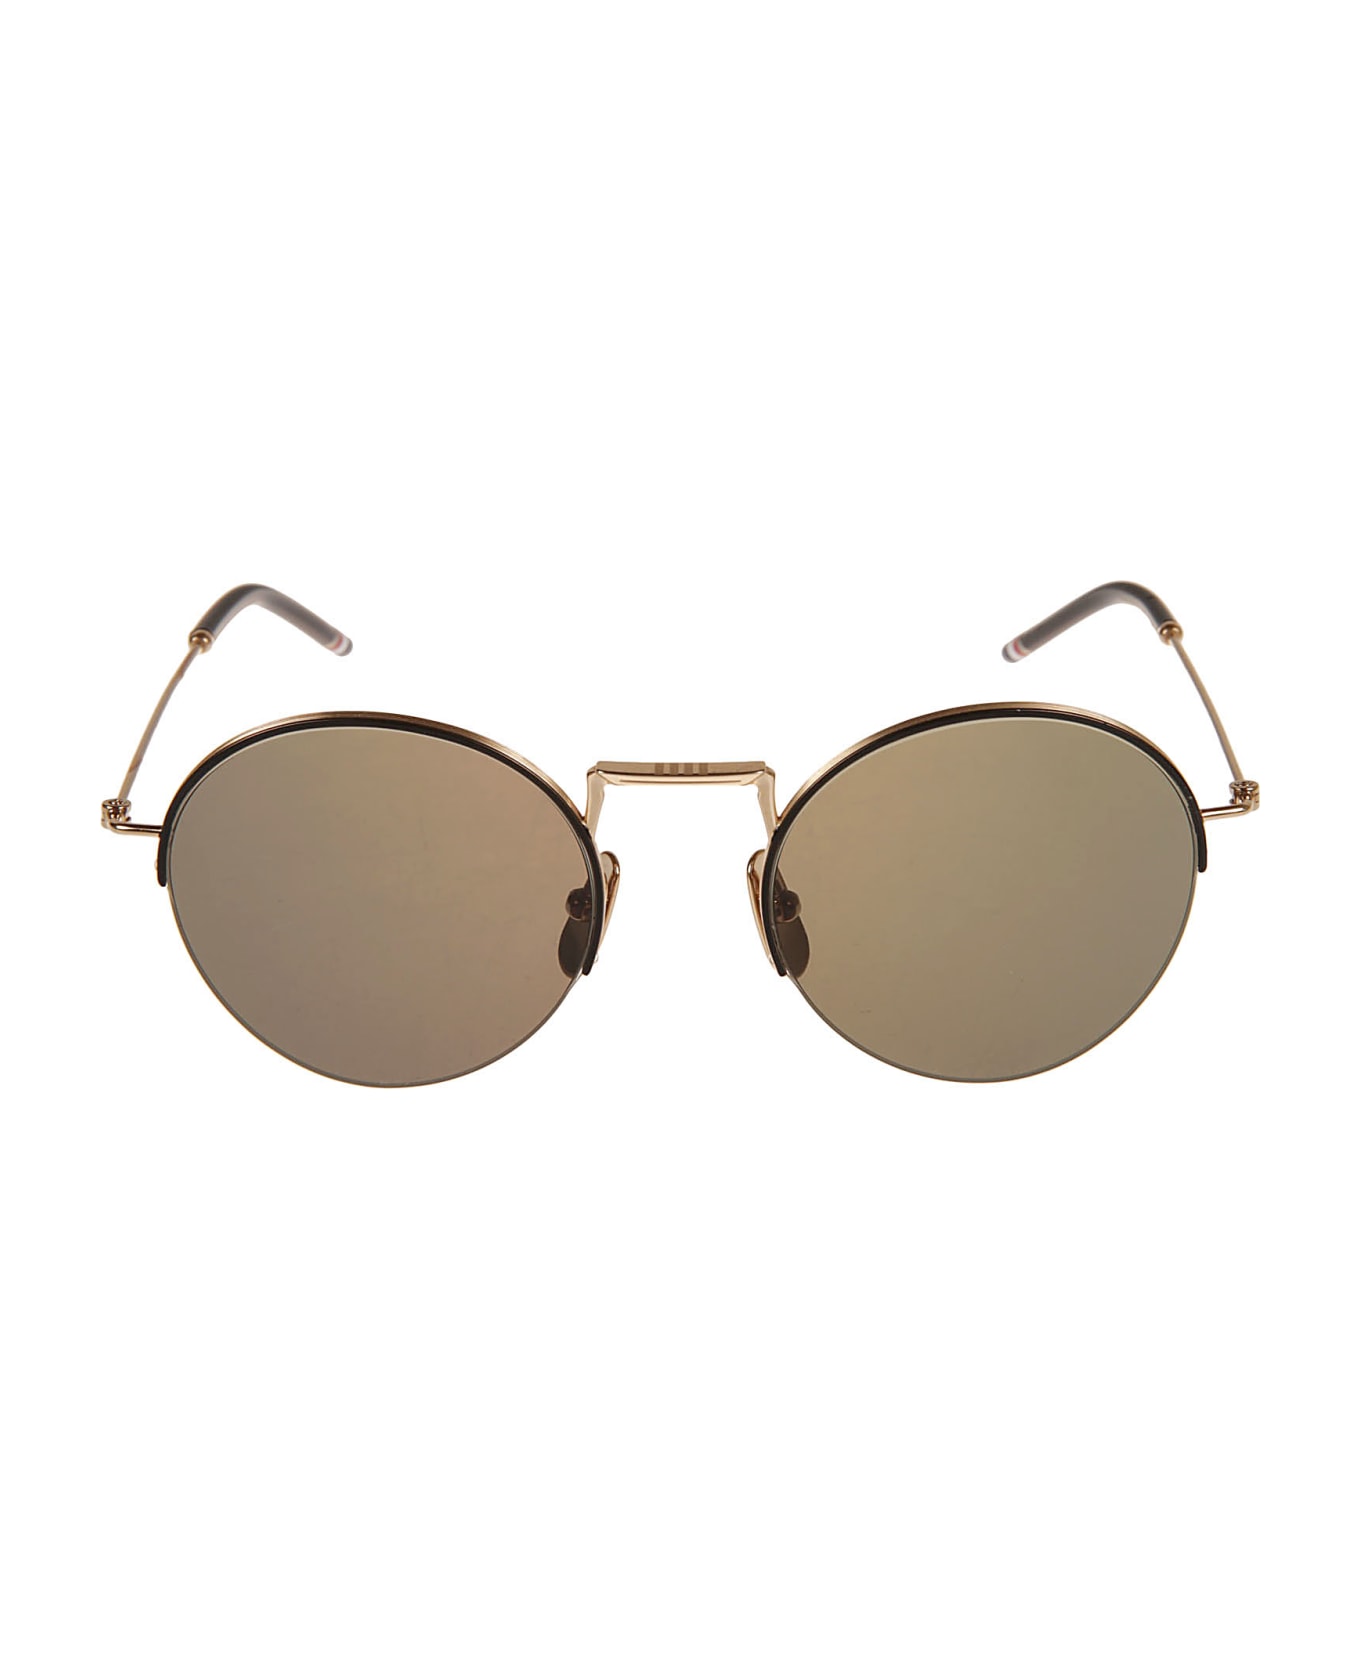 Thom Browne Round Frame Sunglasses - White